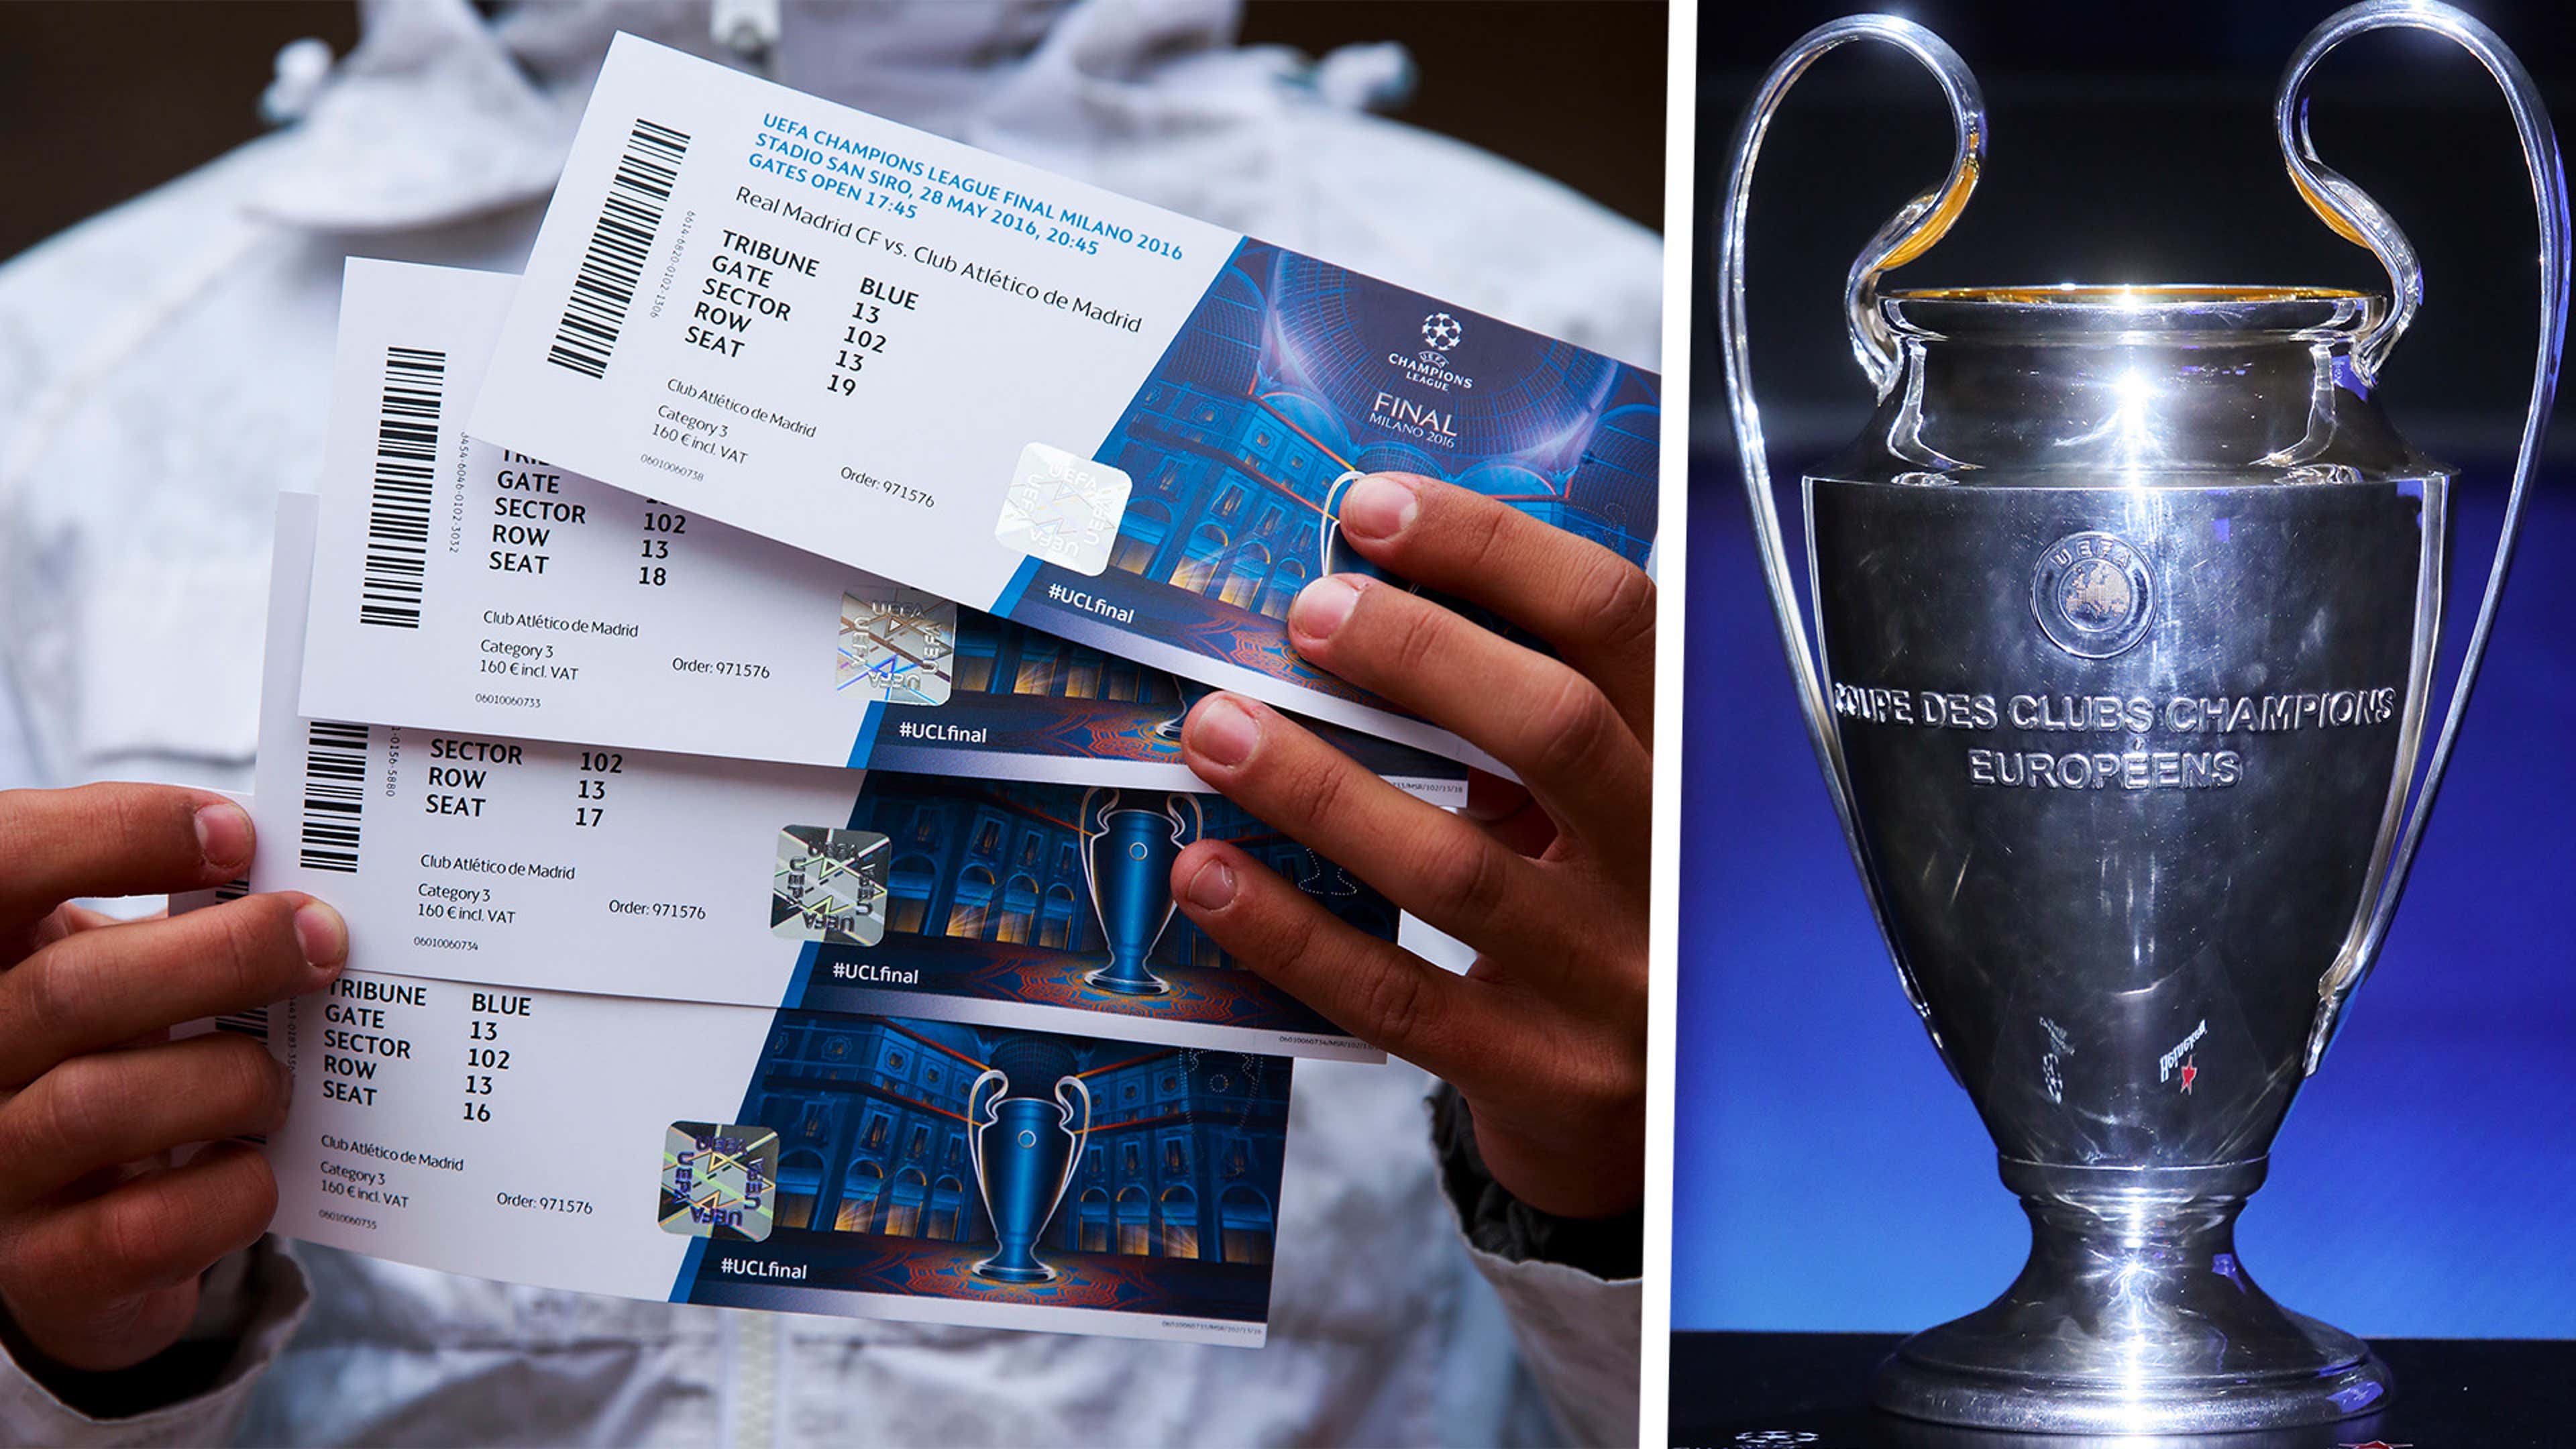 Champions League final tickets